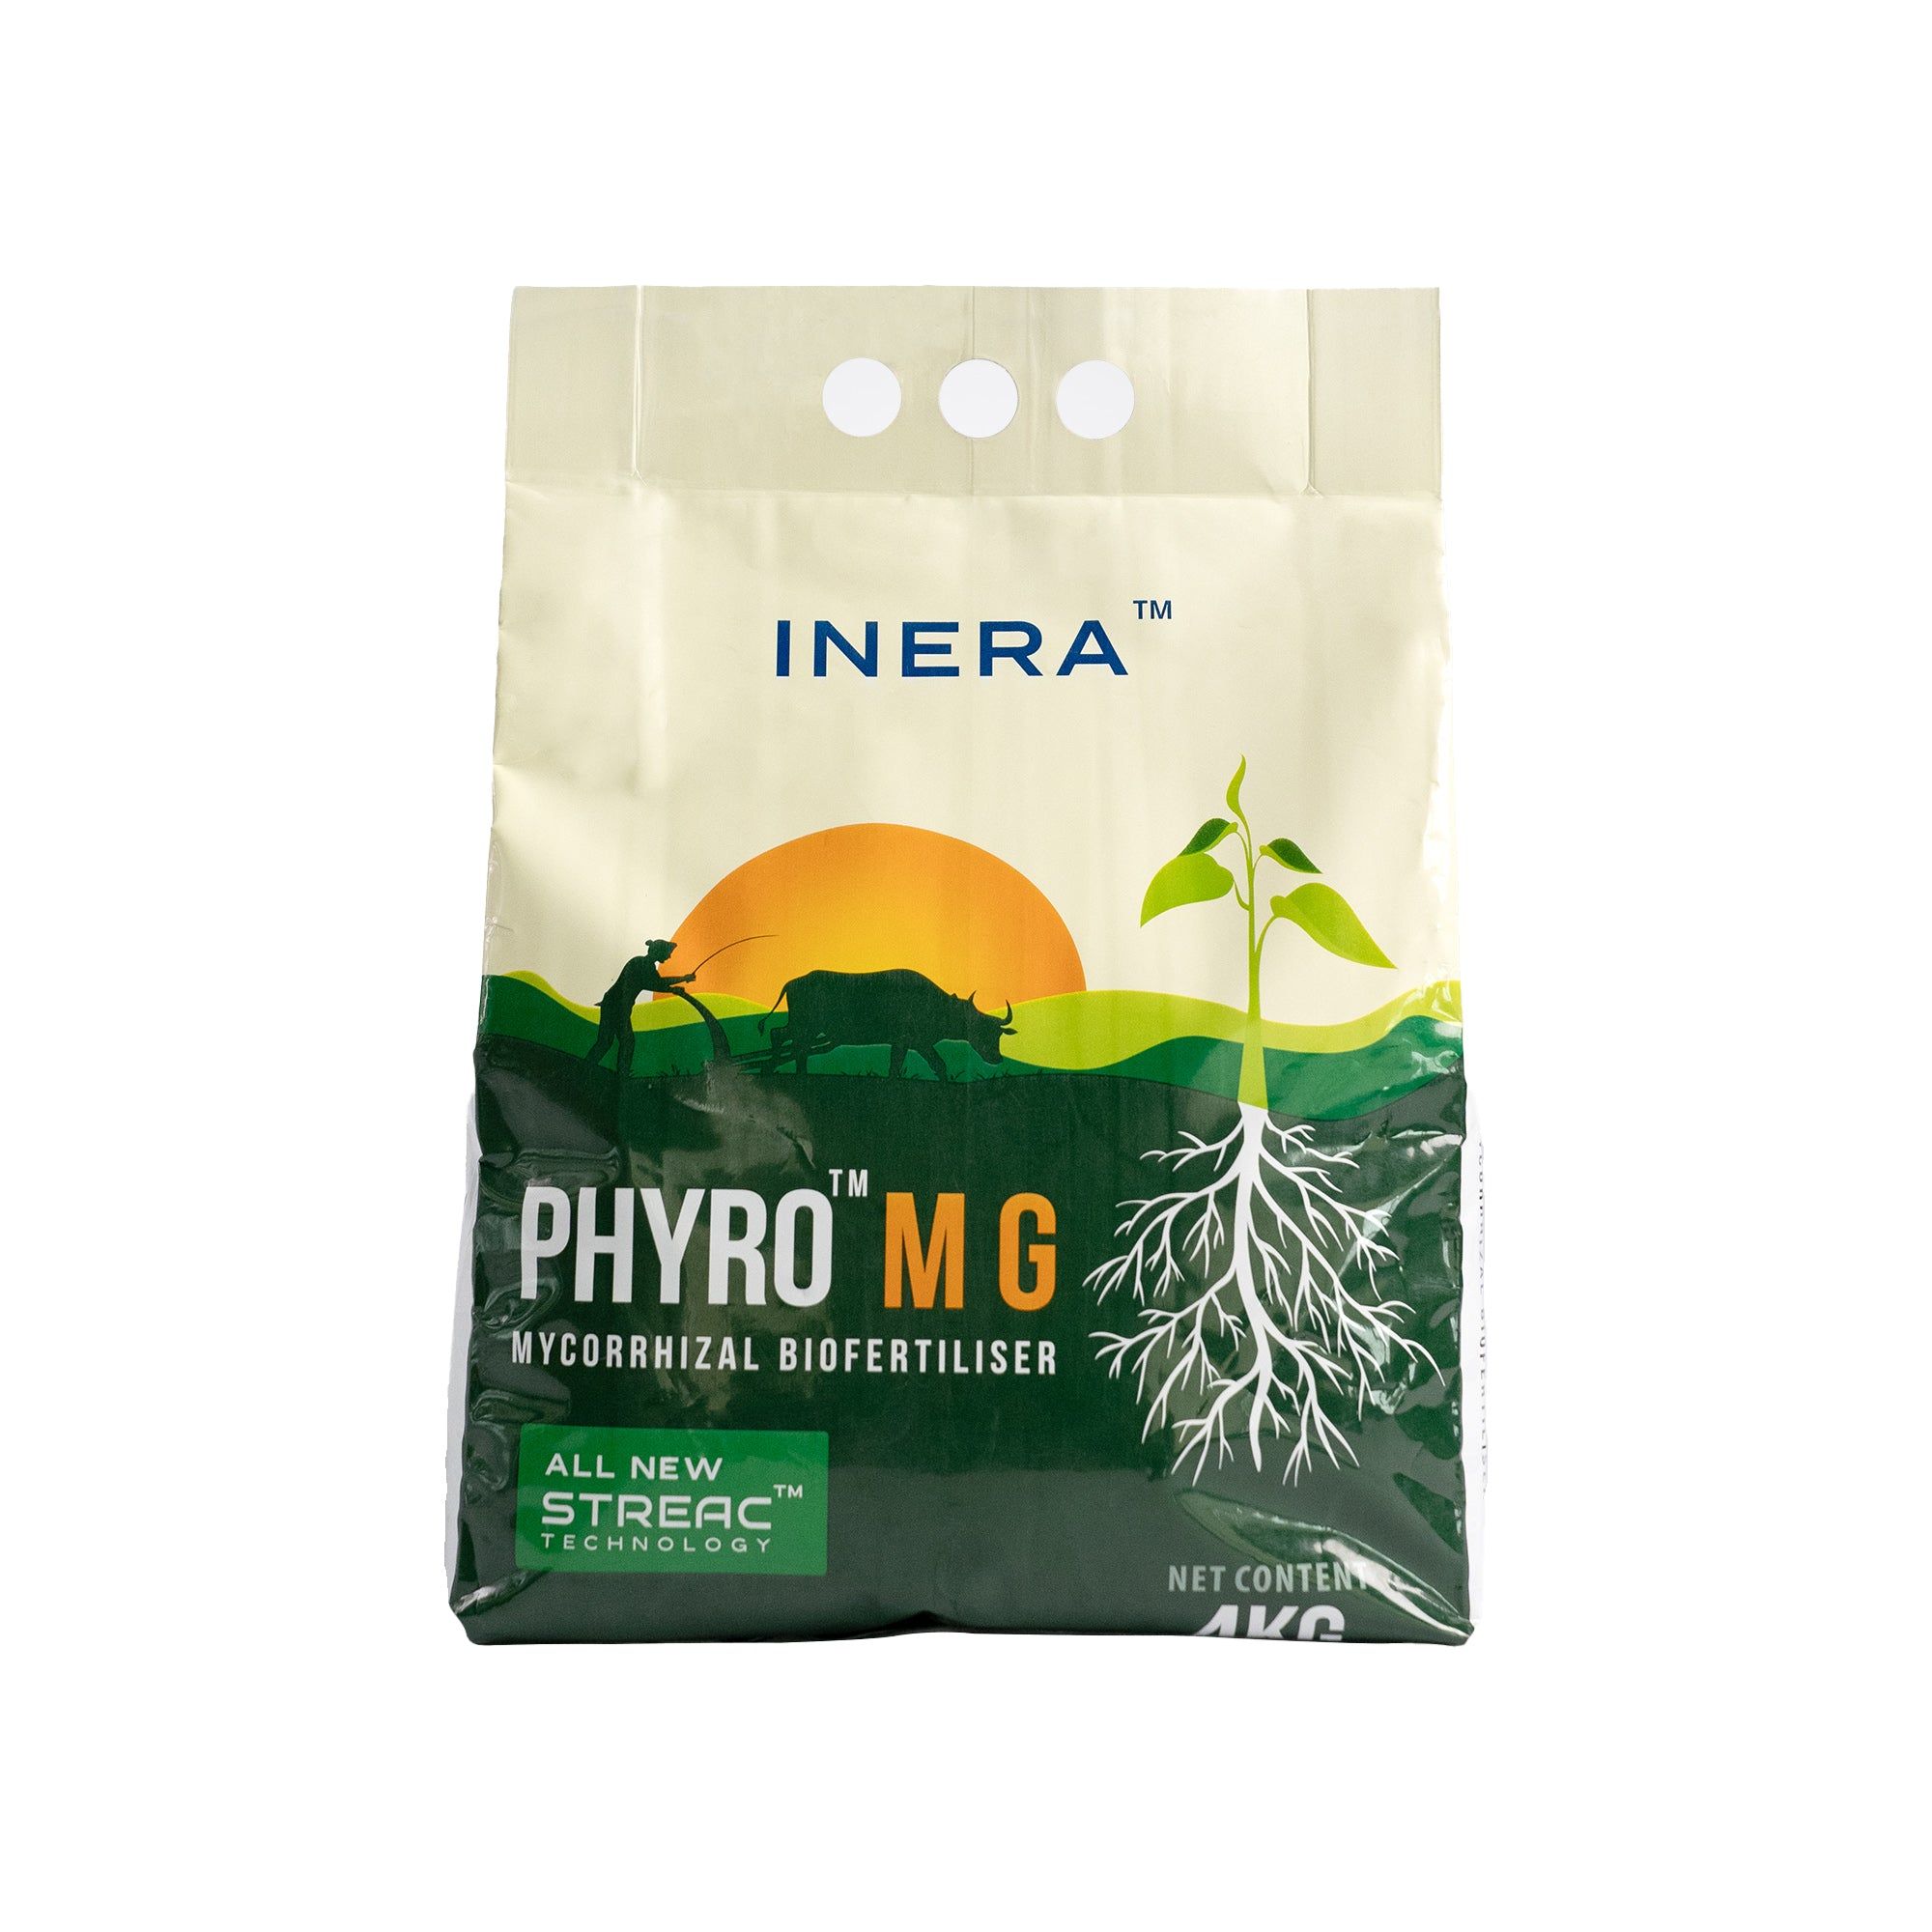 Inera Phyro M G Mycorrhizal Biofertiliser